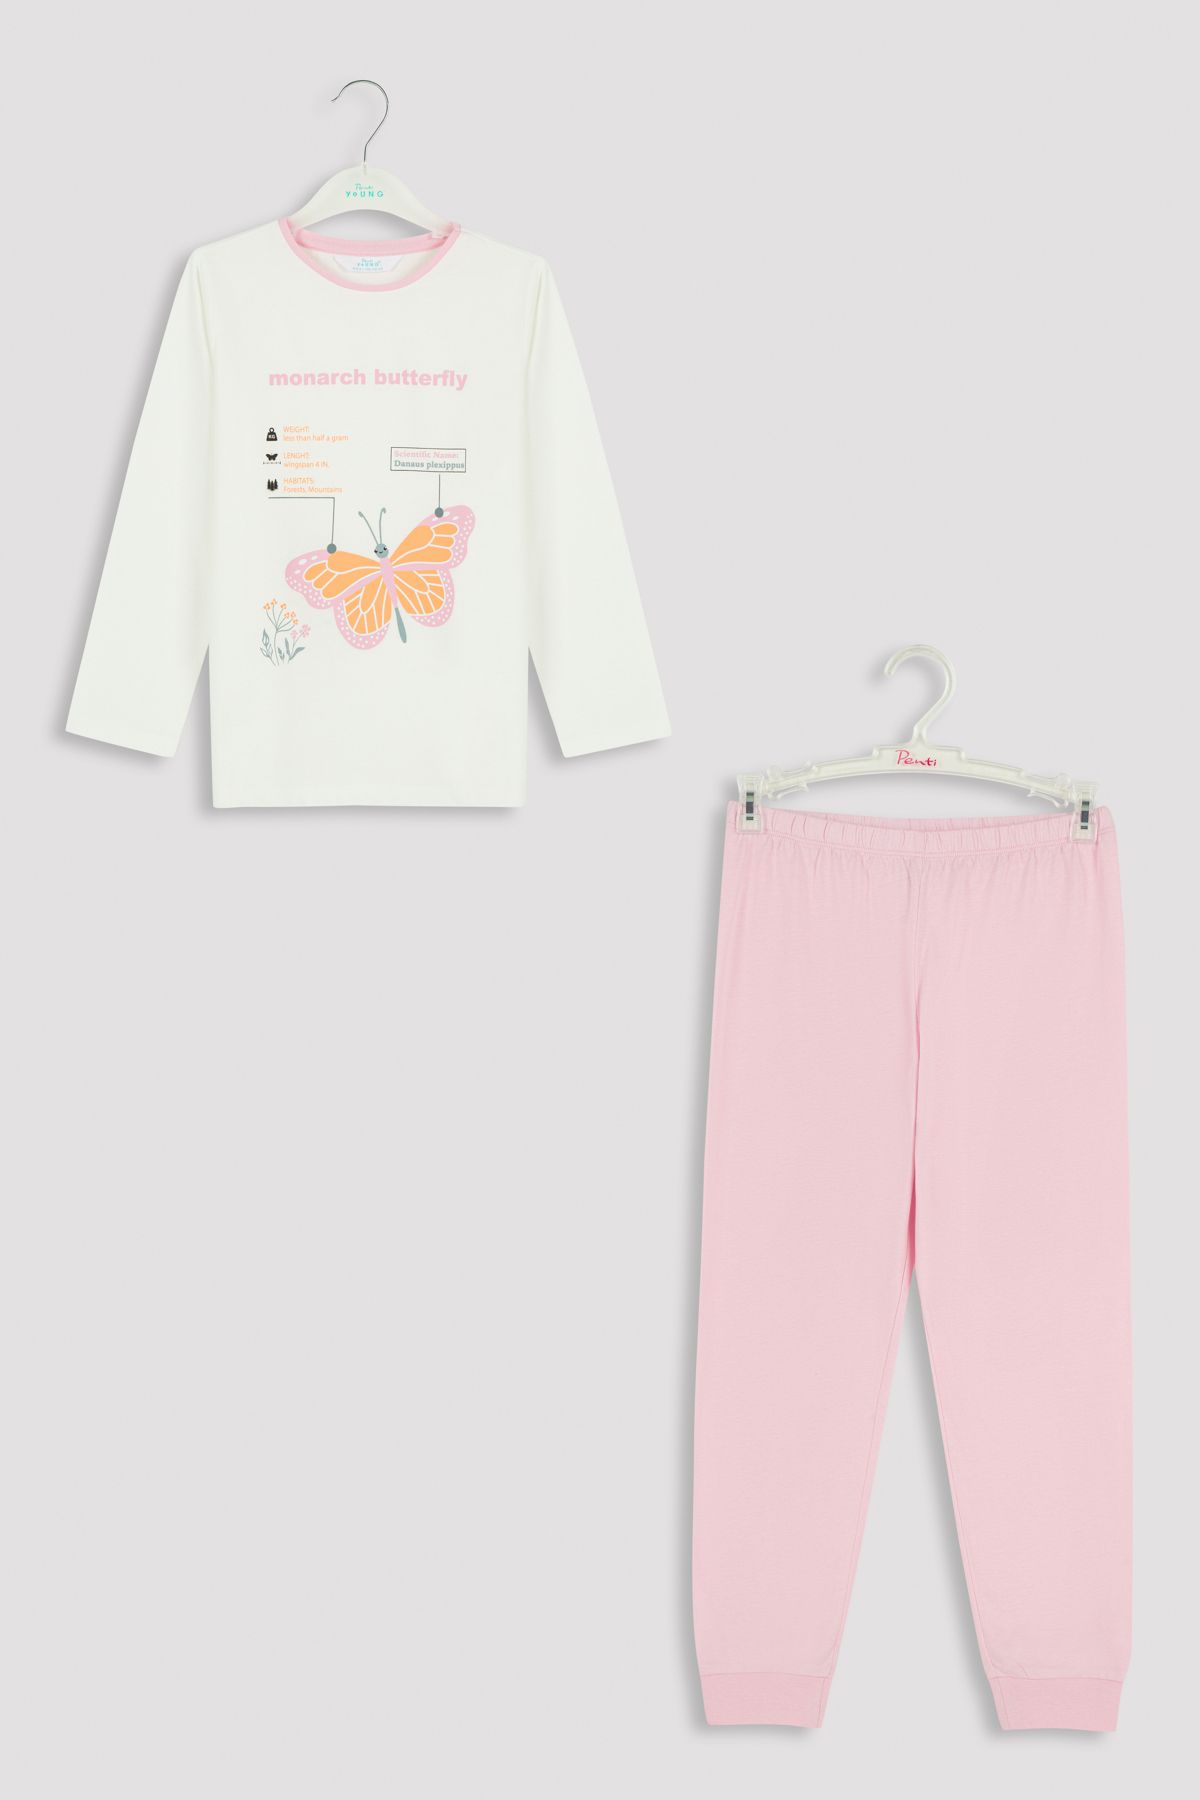 Penti Çok Renkli Girls Monarch Butterfly Pijama Takımı